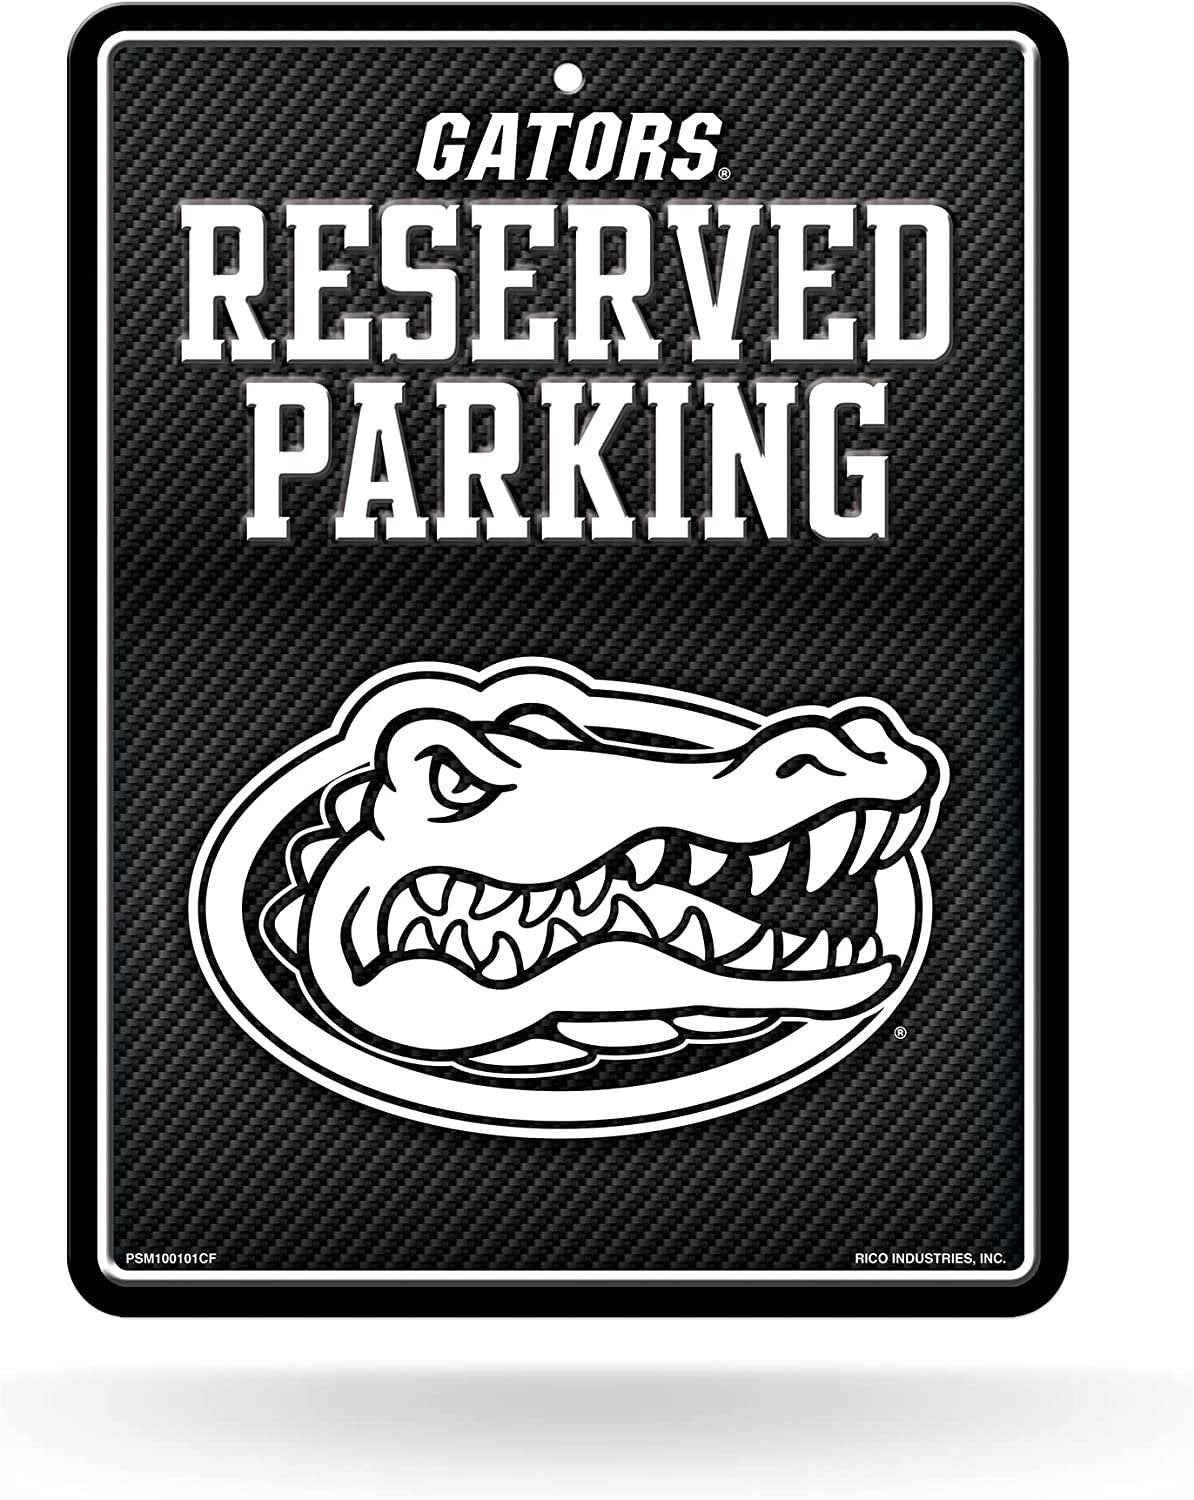 University of Florida Gators Metal Parking Novelty Wall Sign 8.5 x 11 Inch Carbon Fiber Design